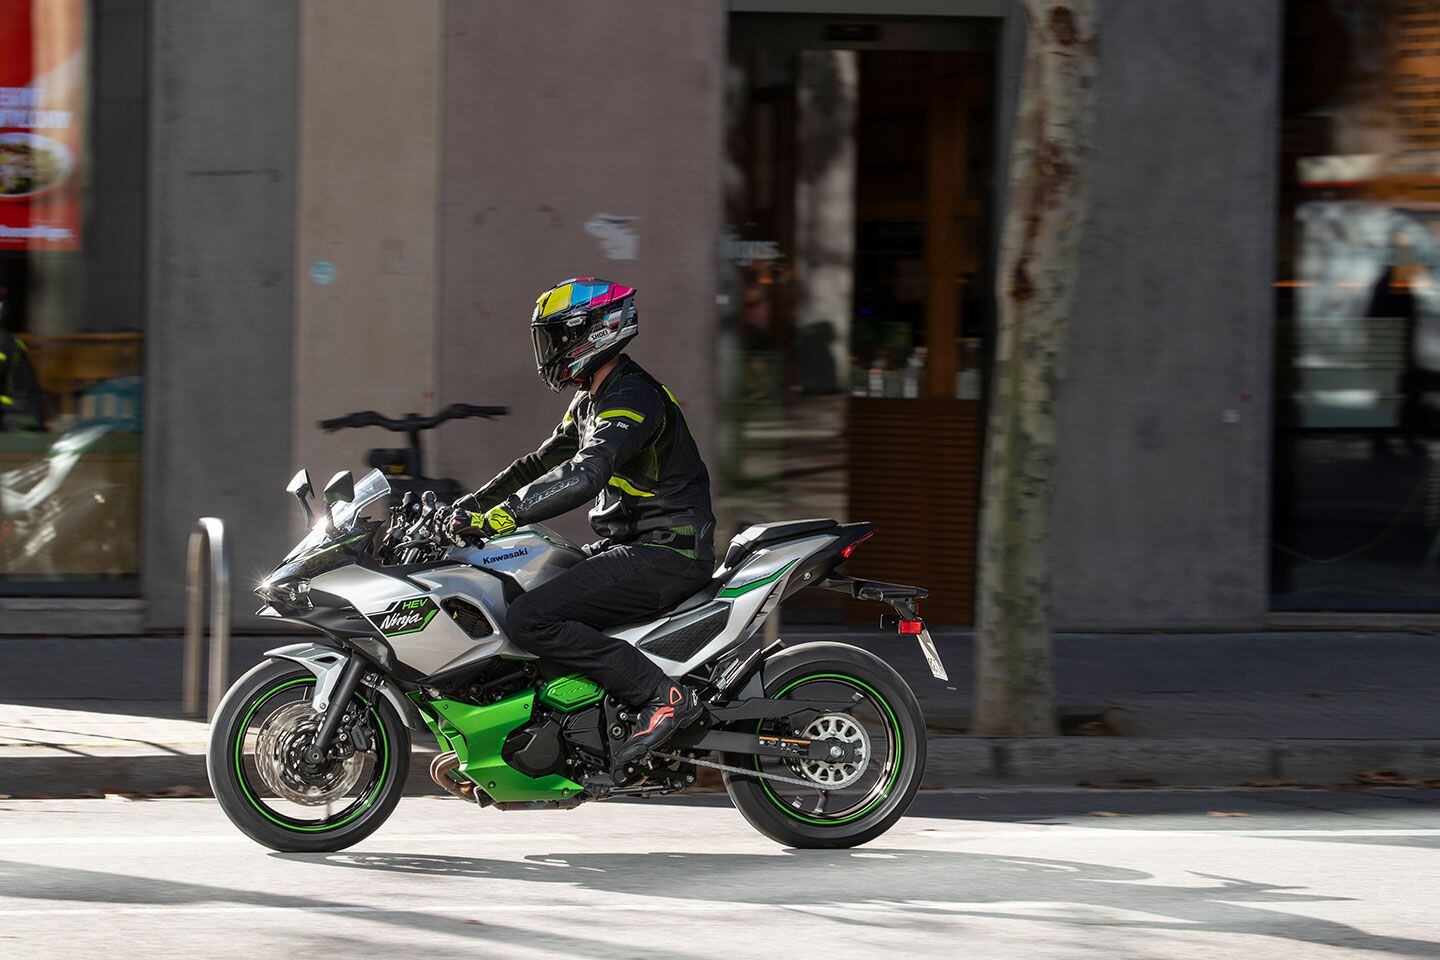 Riding the Kawasaki Ninja 7 Hybrid in Barcelona, Spain. The Ninja 7 is the world’s first mass-production strong hybrid motorcycle.